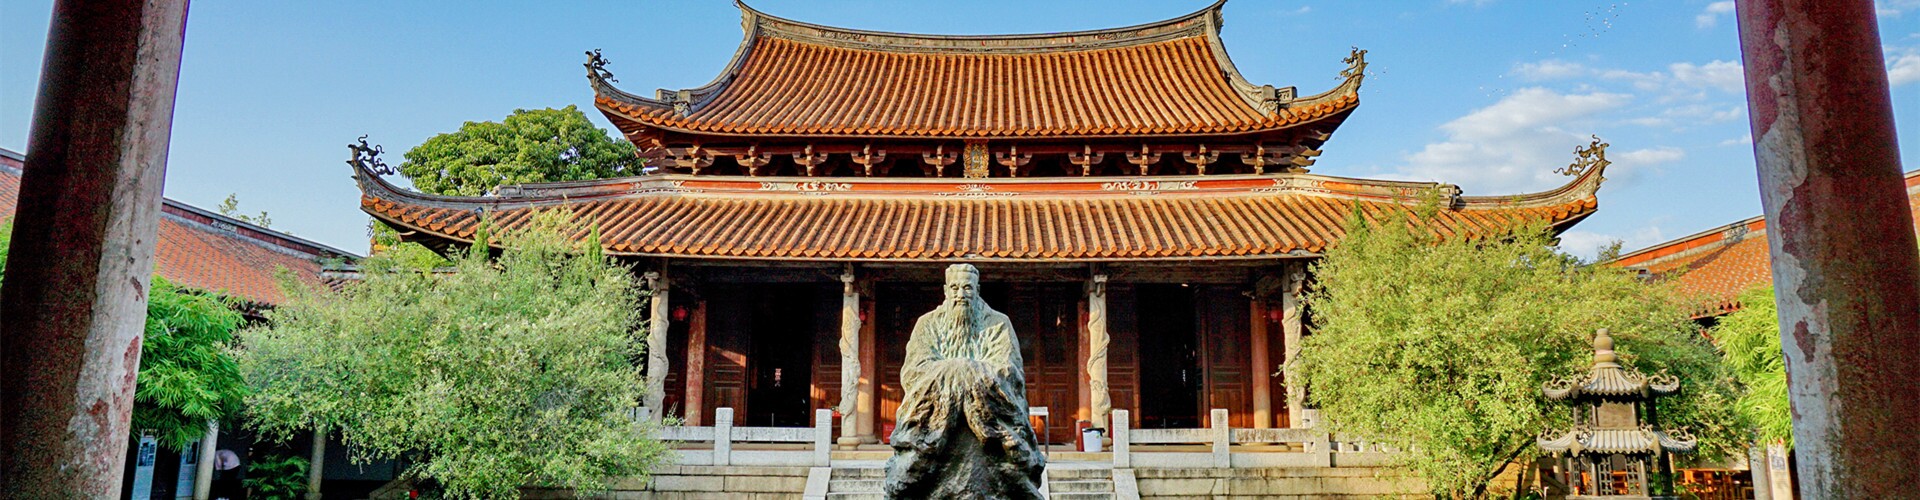 Beijing Temple of Confucius -  a Famous Temple in Beijing